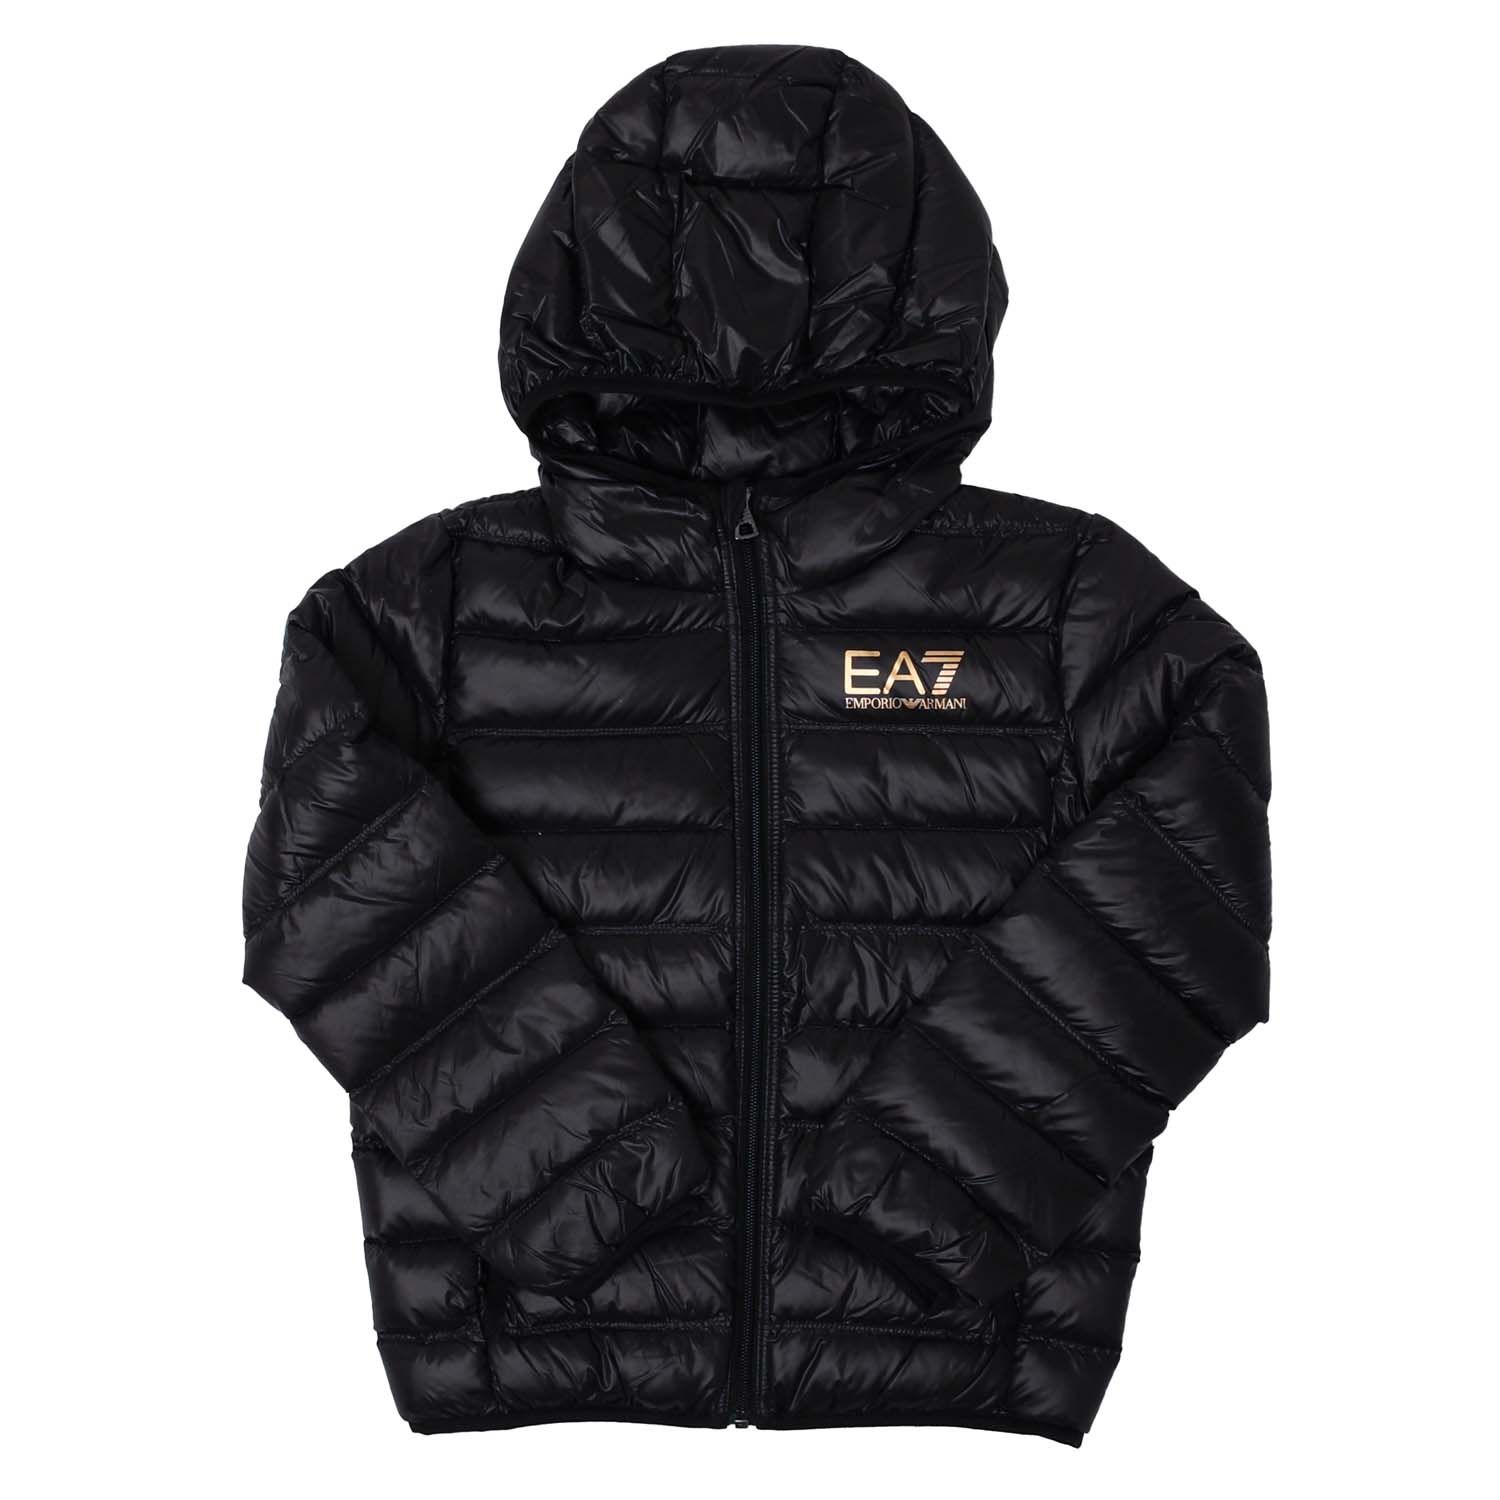 Emporio Armani EA7 Boys Core ID Down Hooded Jacket in Black Gold